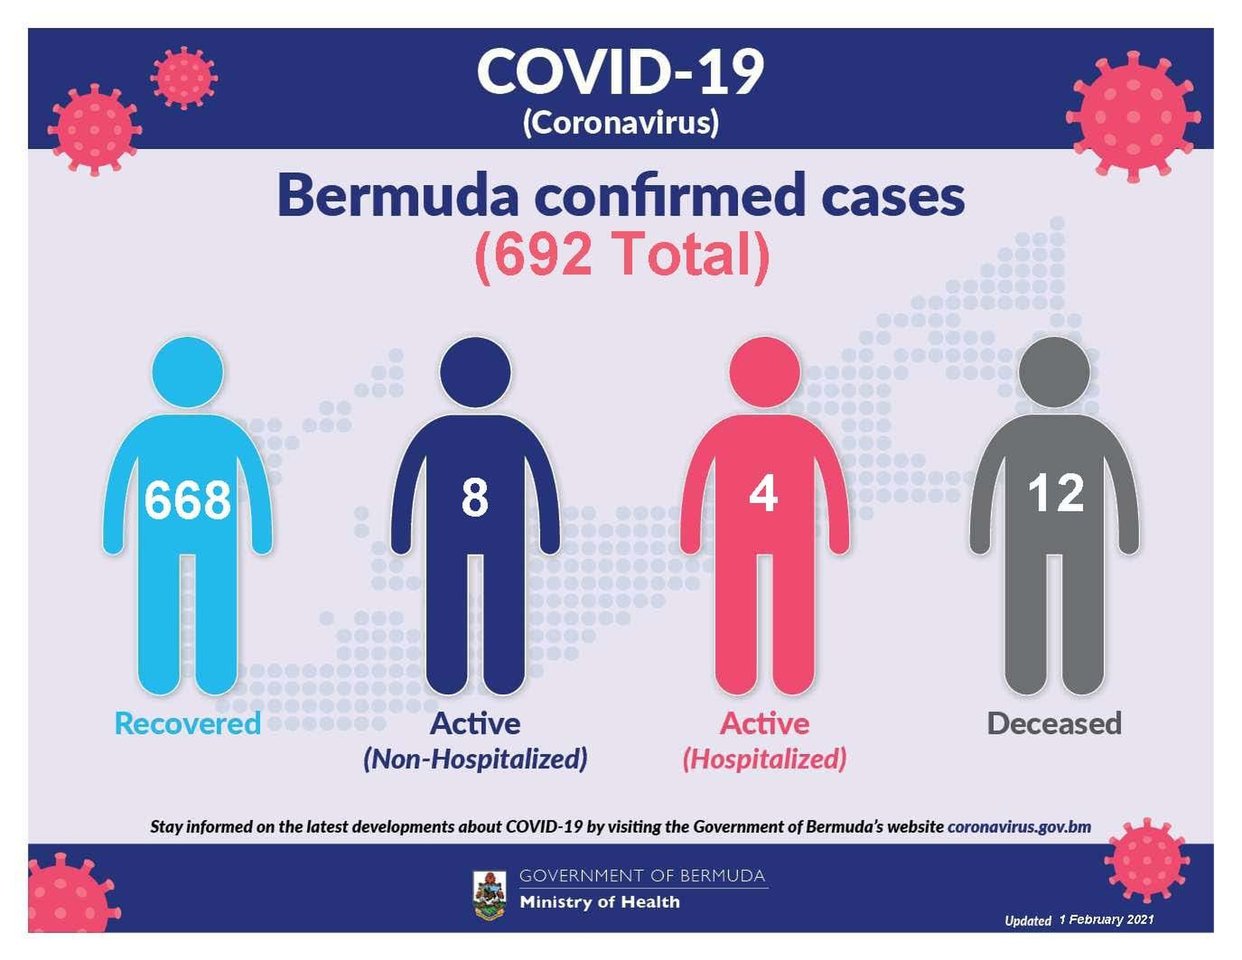 One new COVID-19 case reported in Bermuda, 1 February 2021